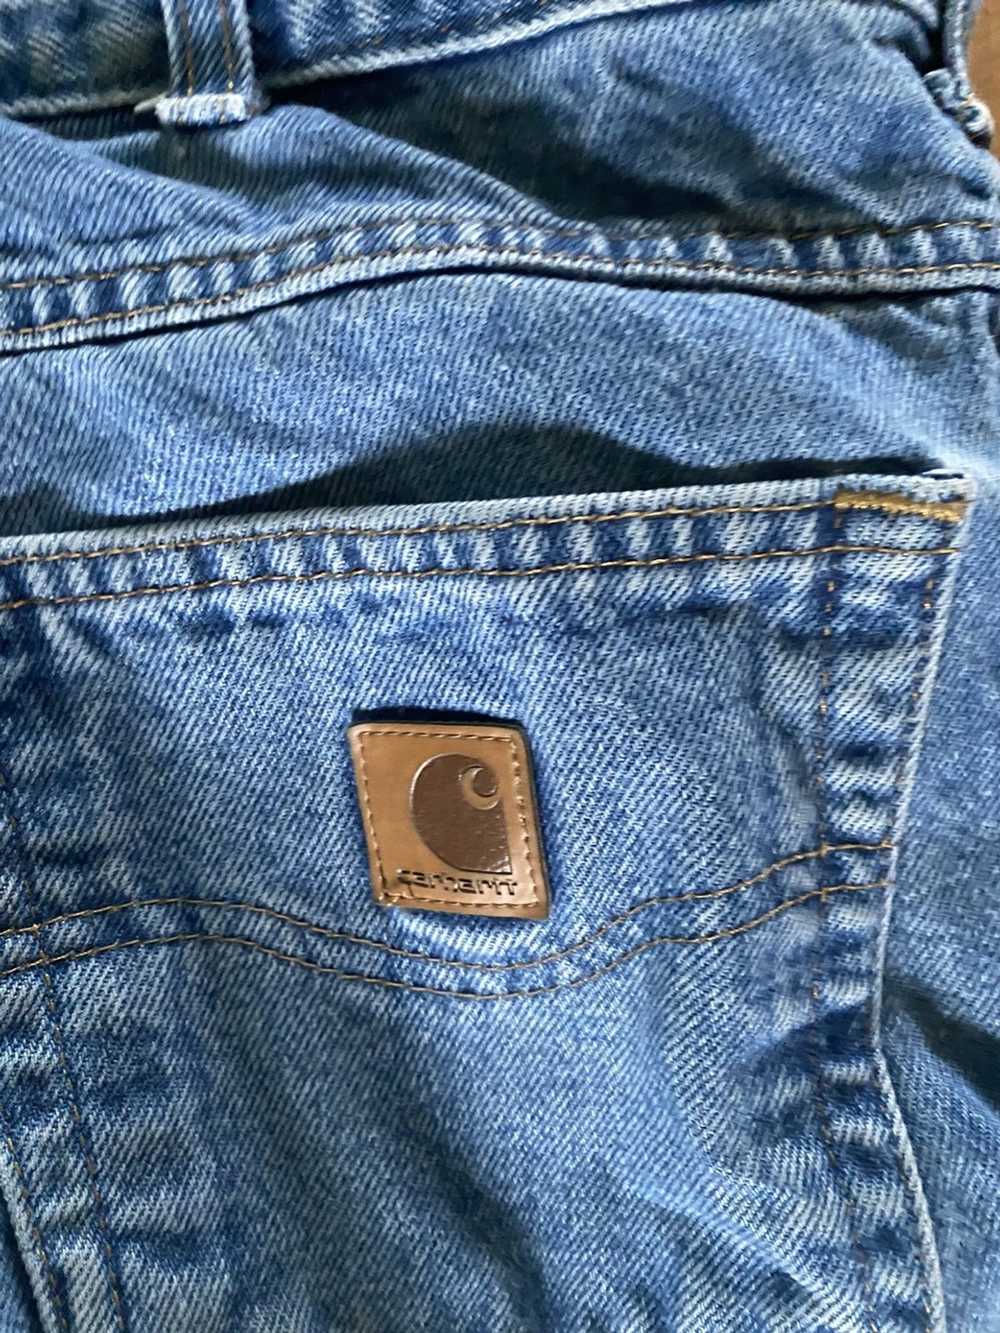 Carhartt Distressed Carhartt Jeans - image 6